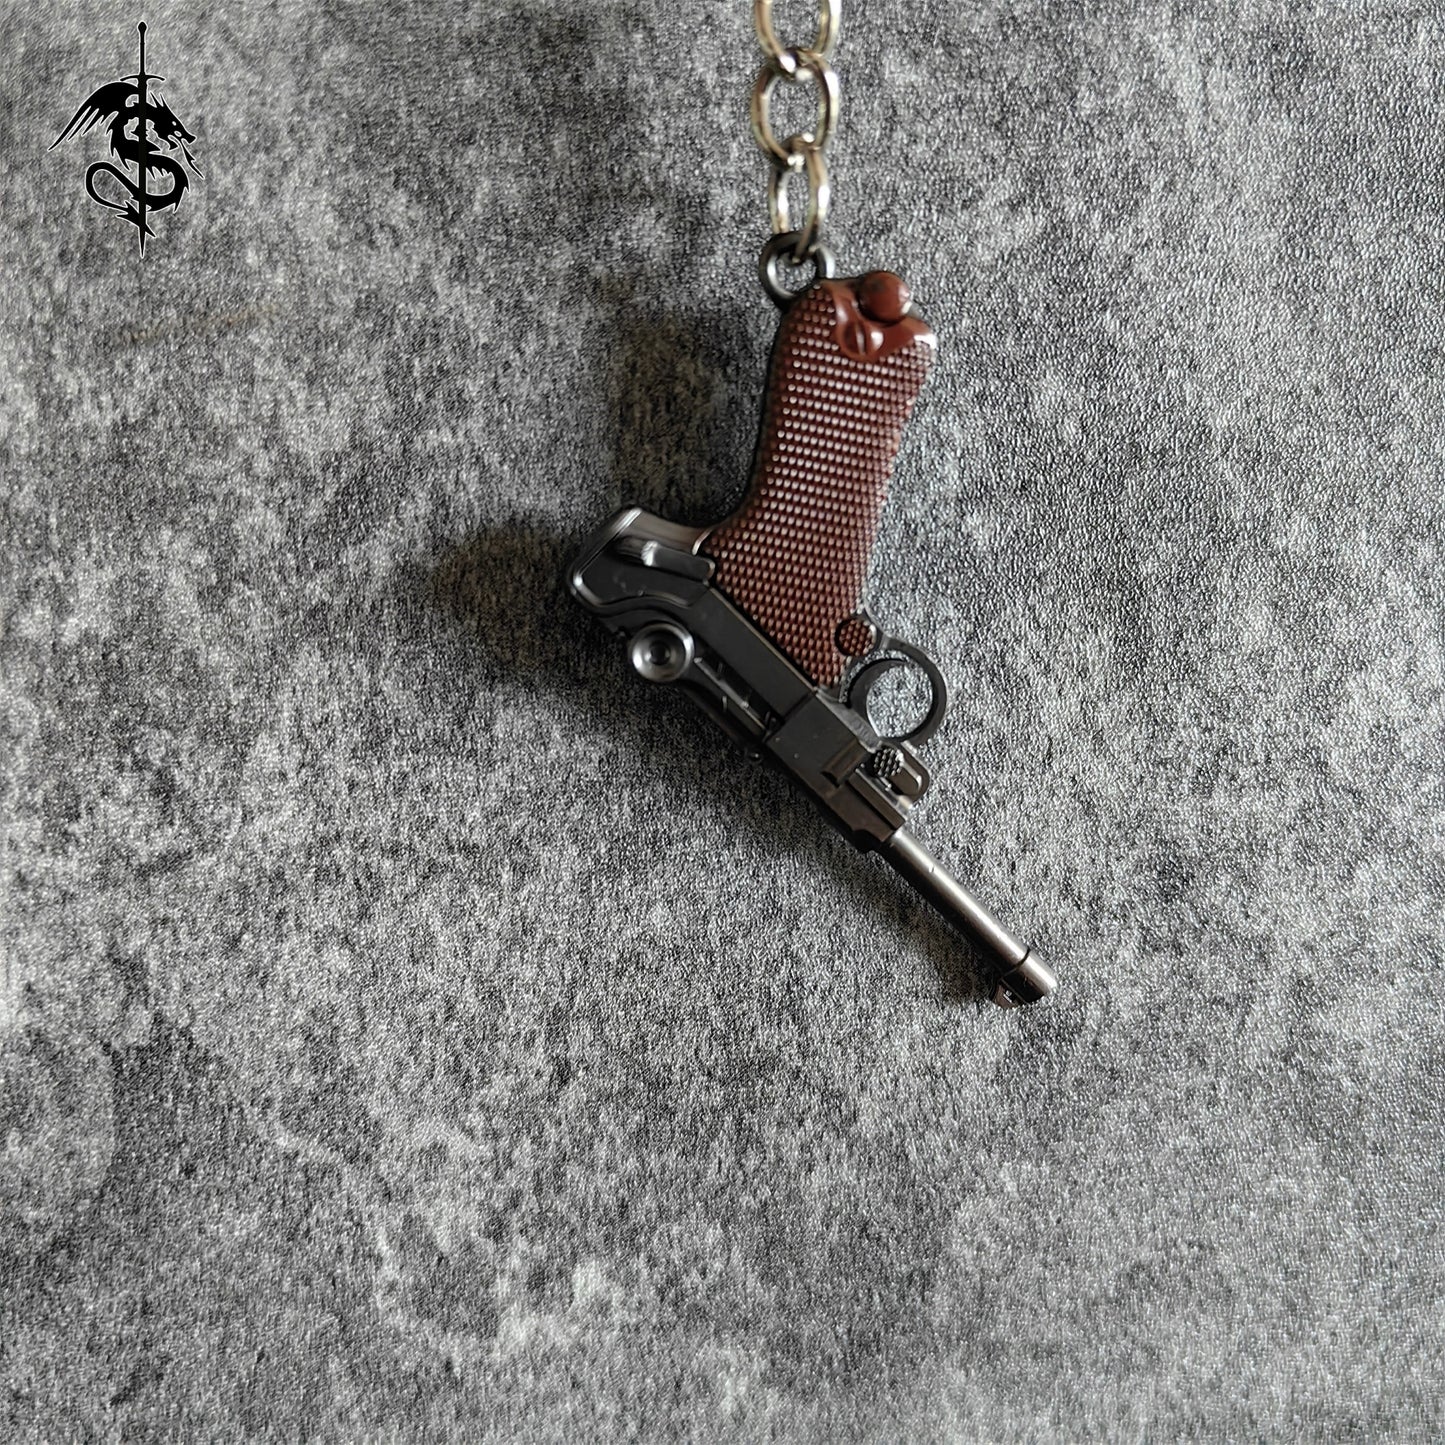 Luger P08 Pistole Modell 1908 Tiny Gun Model Keychain